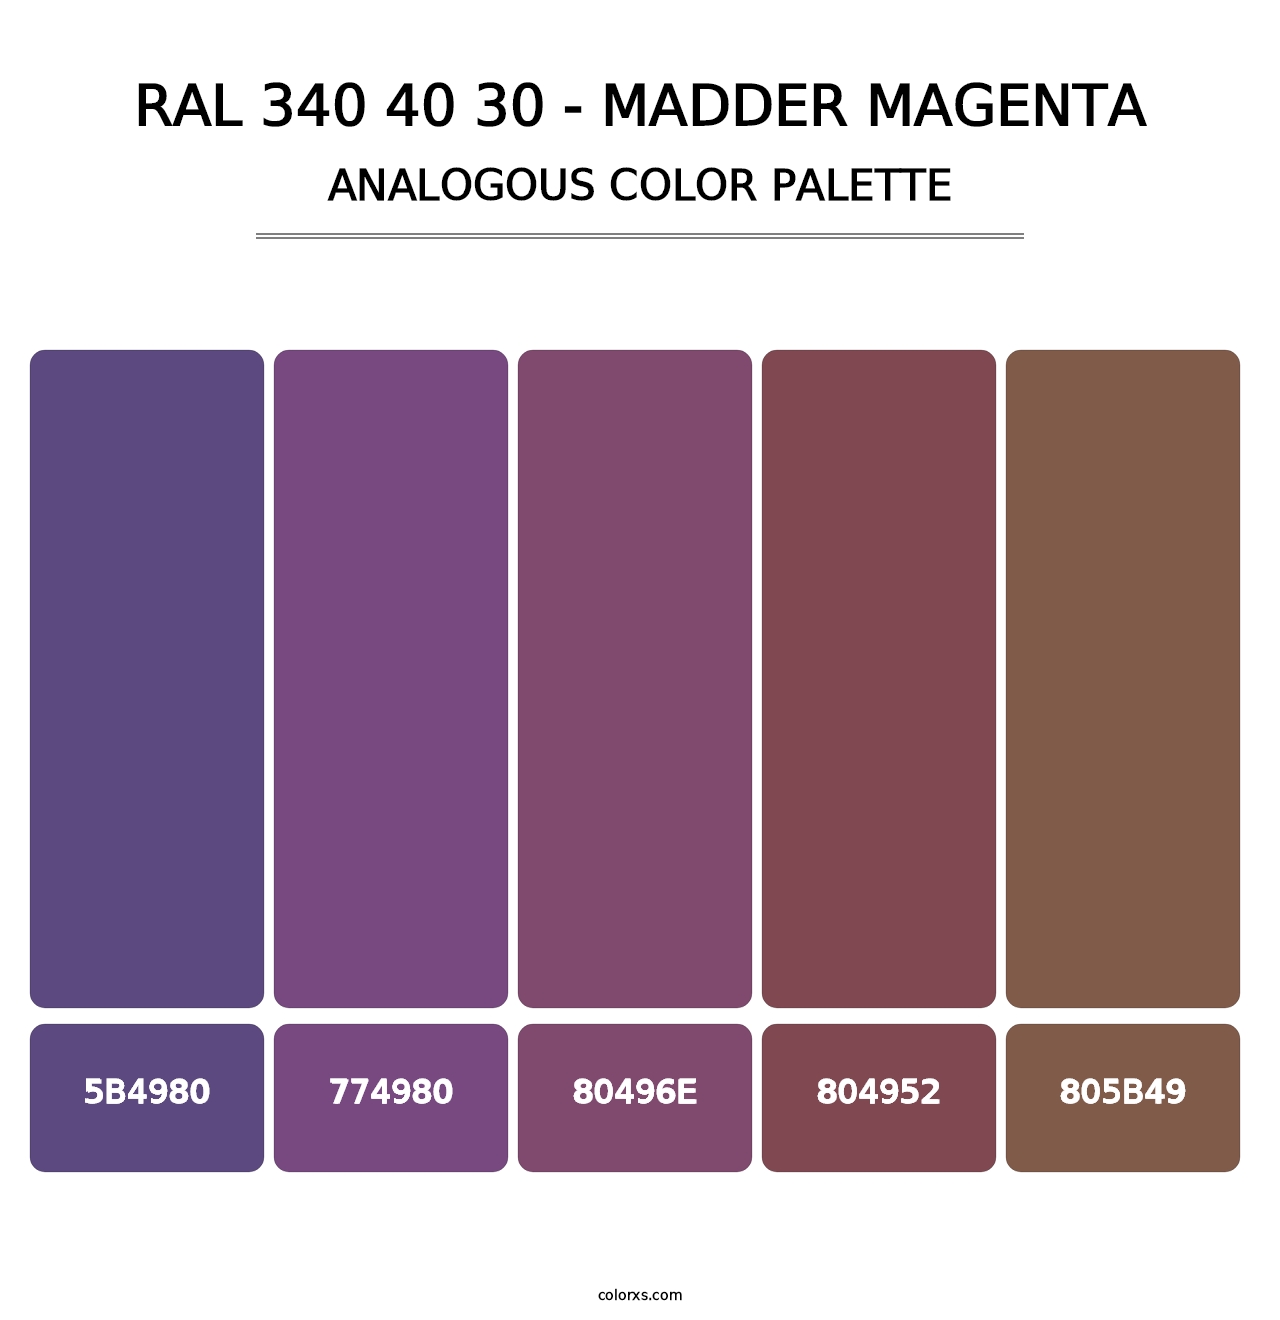 RAL 340 40 30 - Madder Magenta - Analogous Color Palette